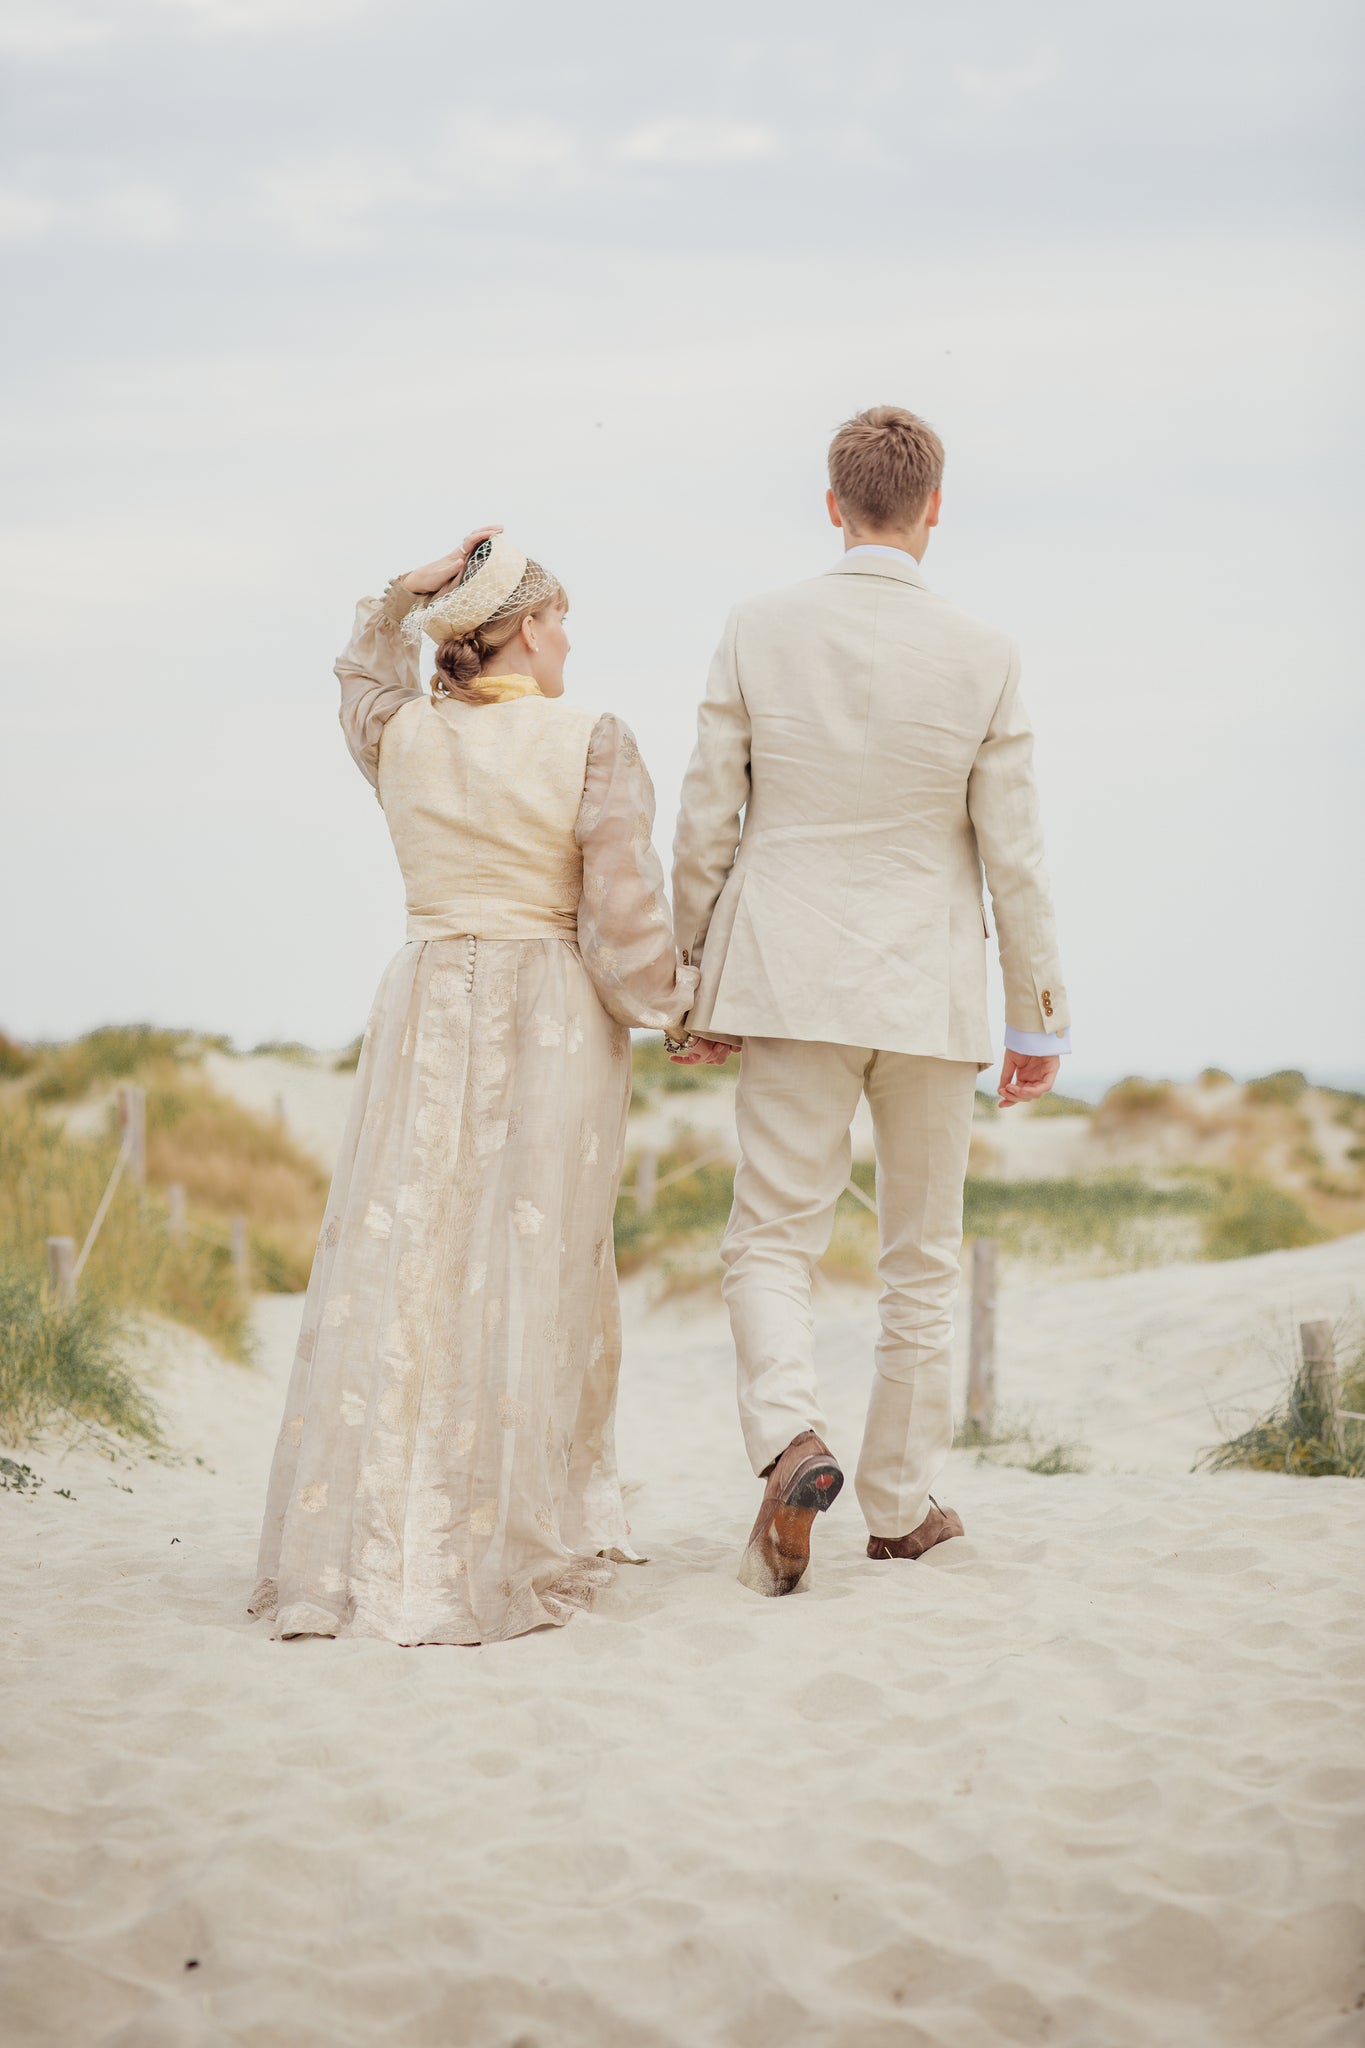 A Beach bride and groom